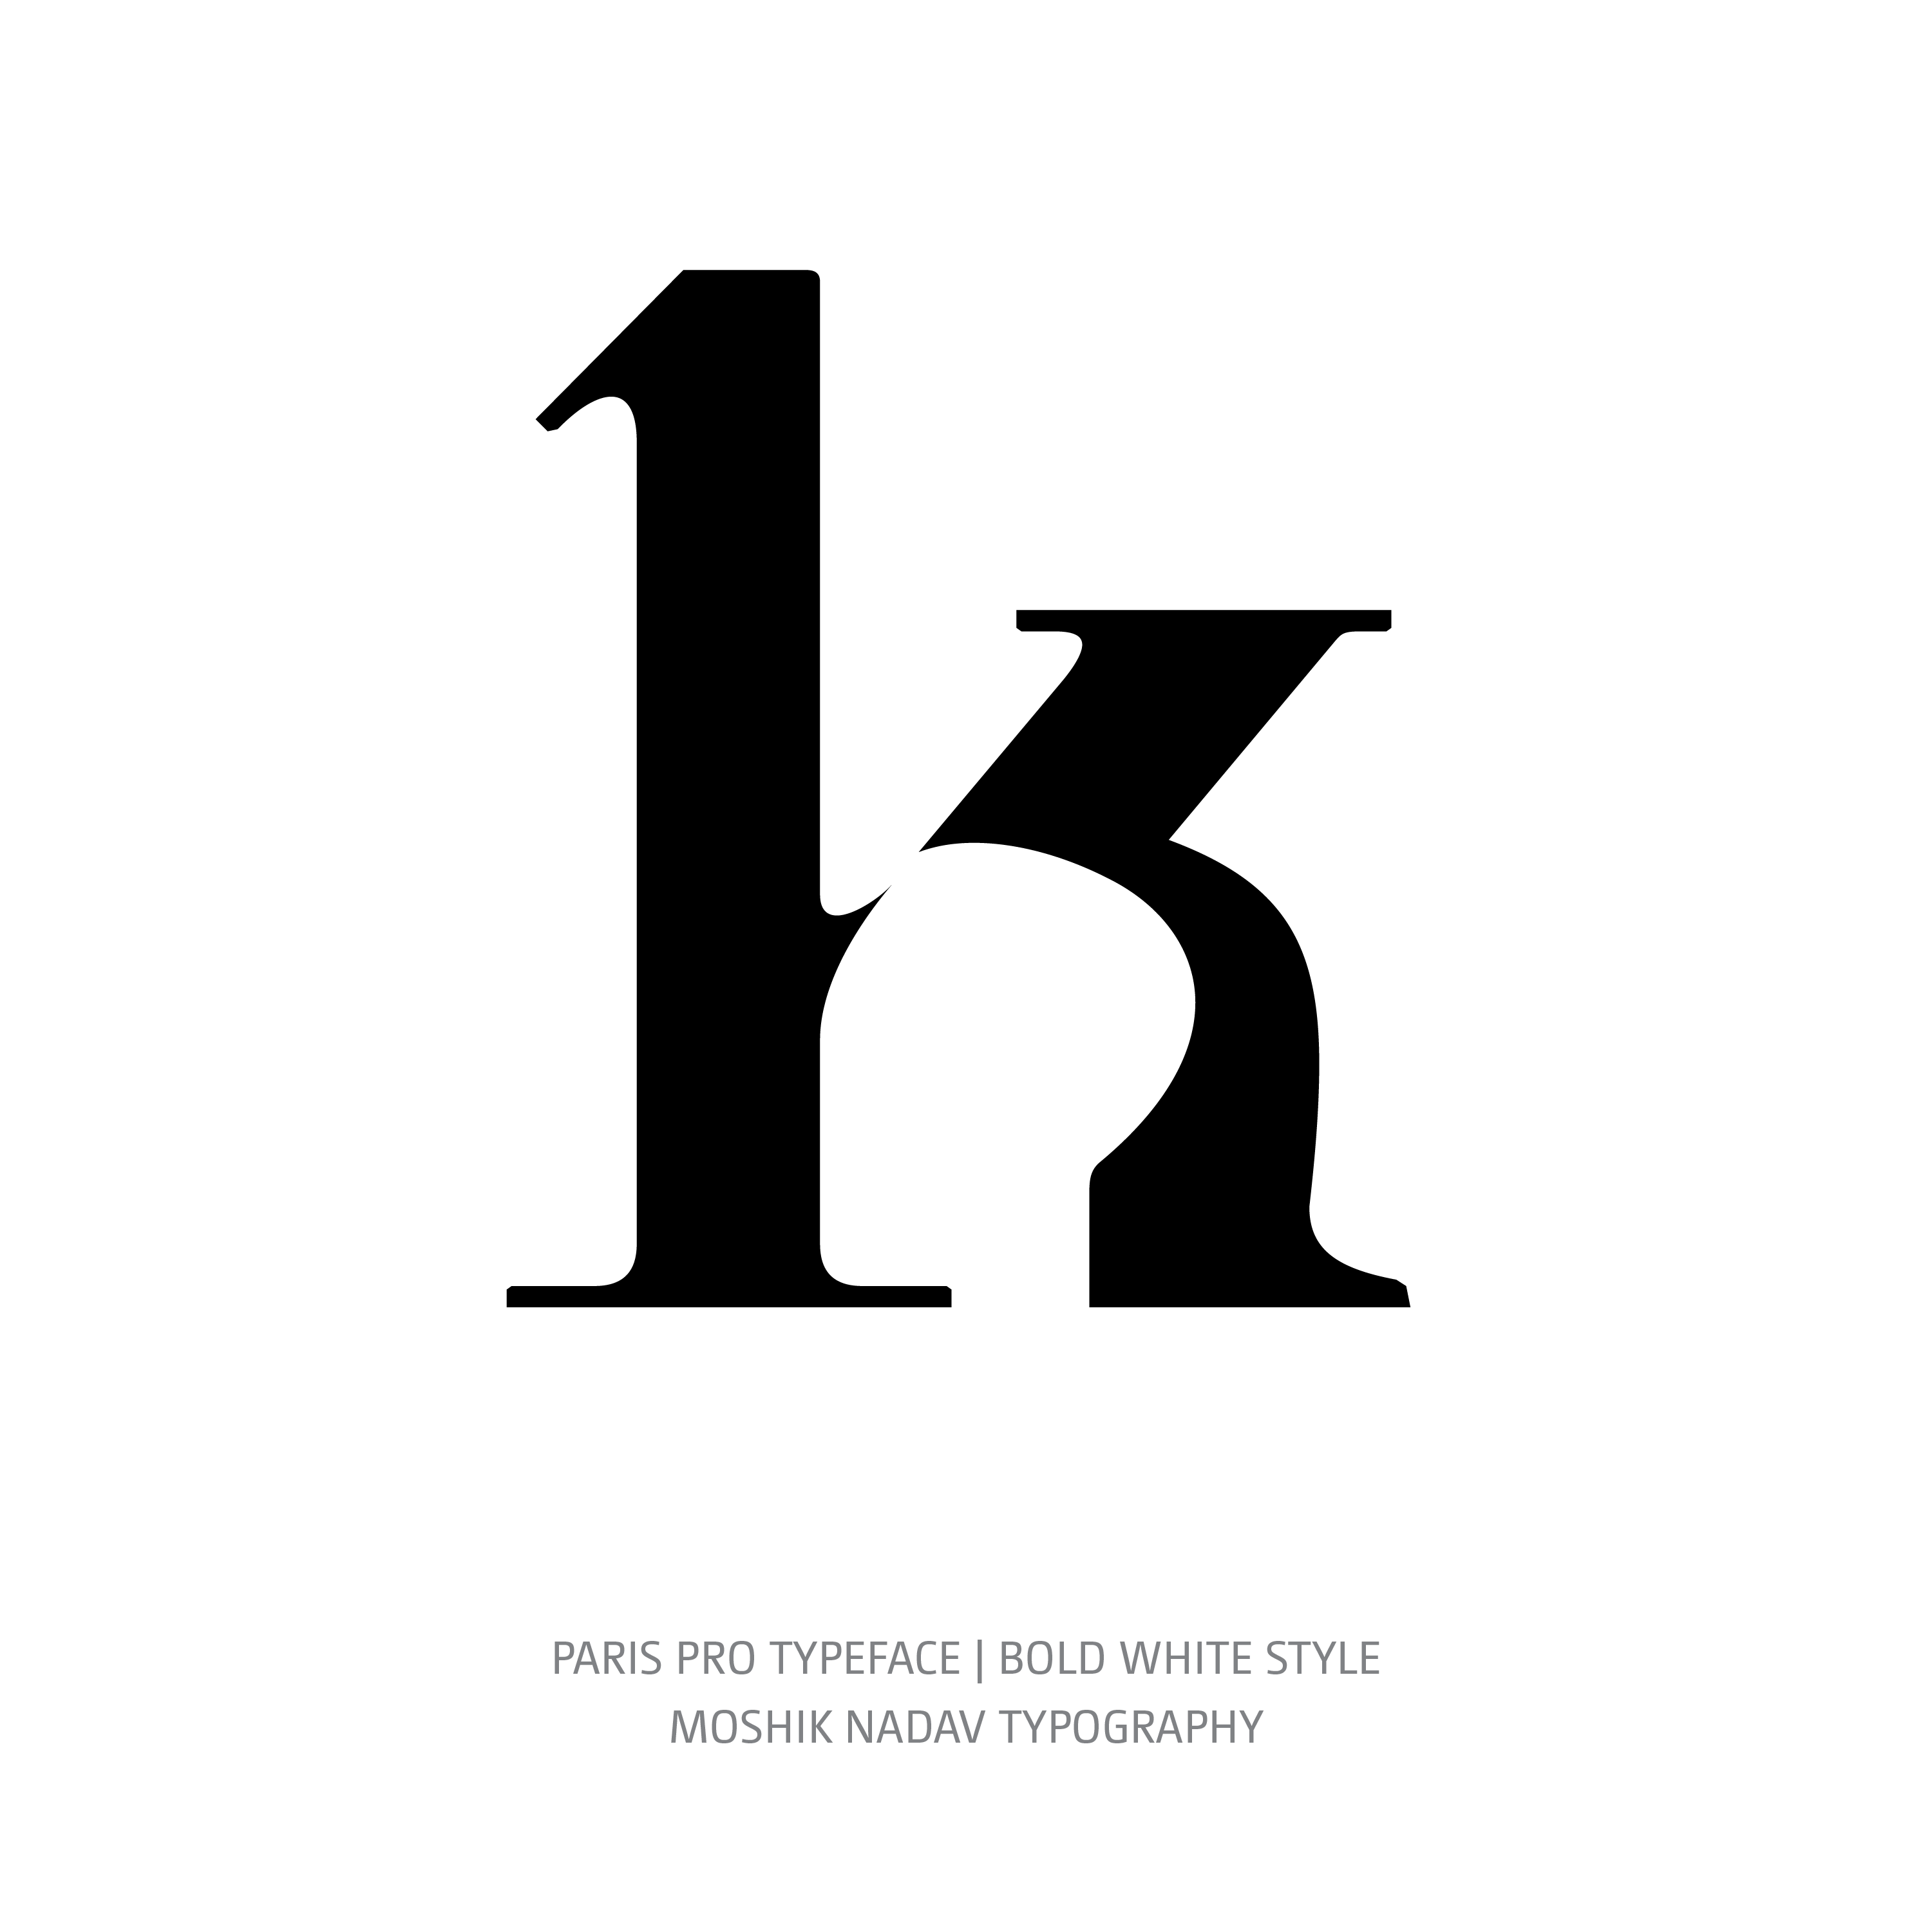 Paris Pro Typeface Bold White k